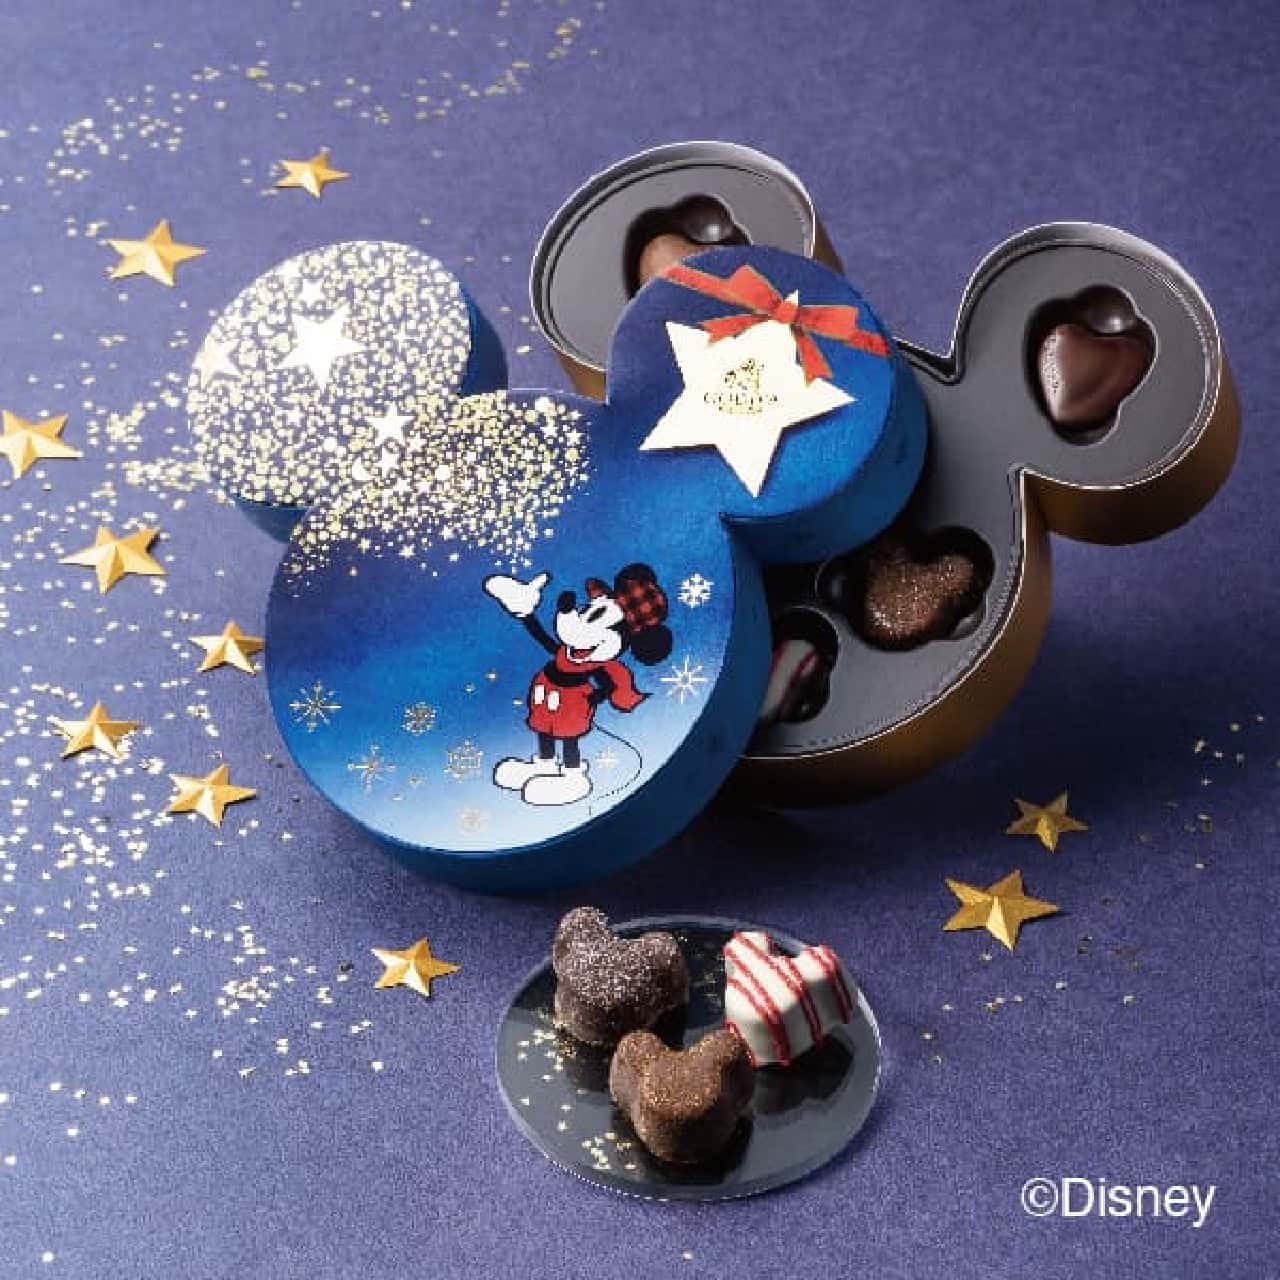 Godiva "Mickey/Star Magic Collection".